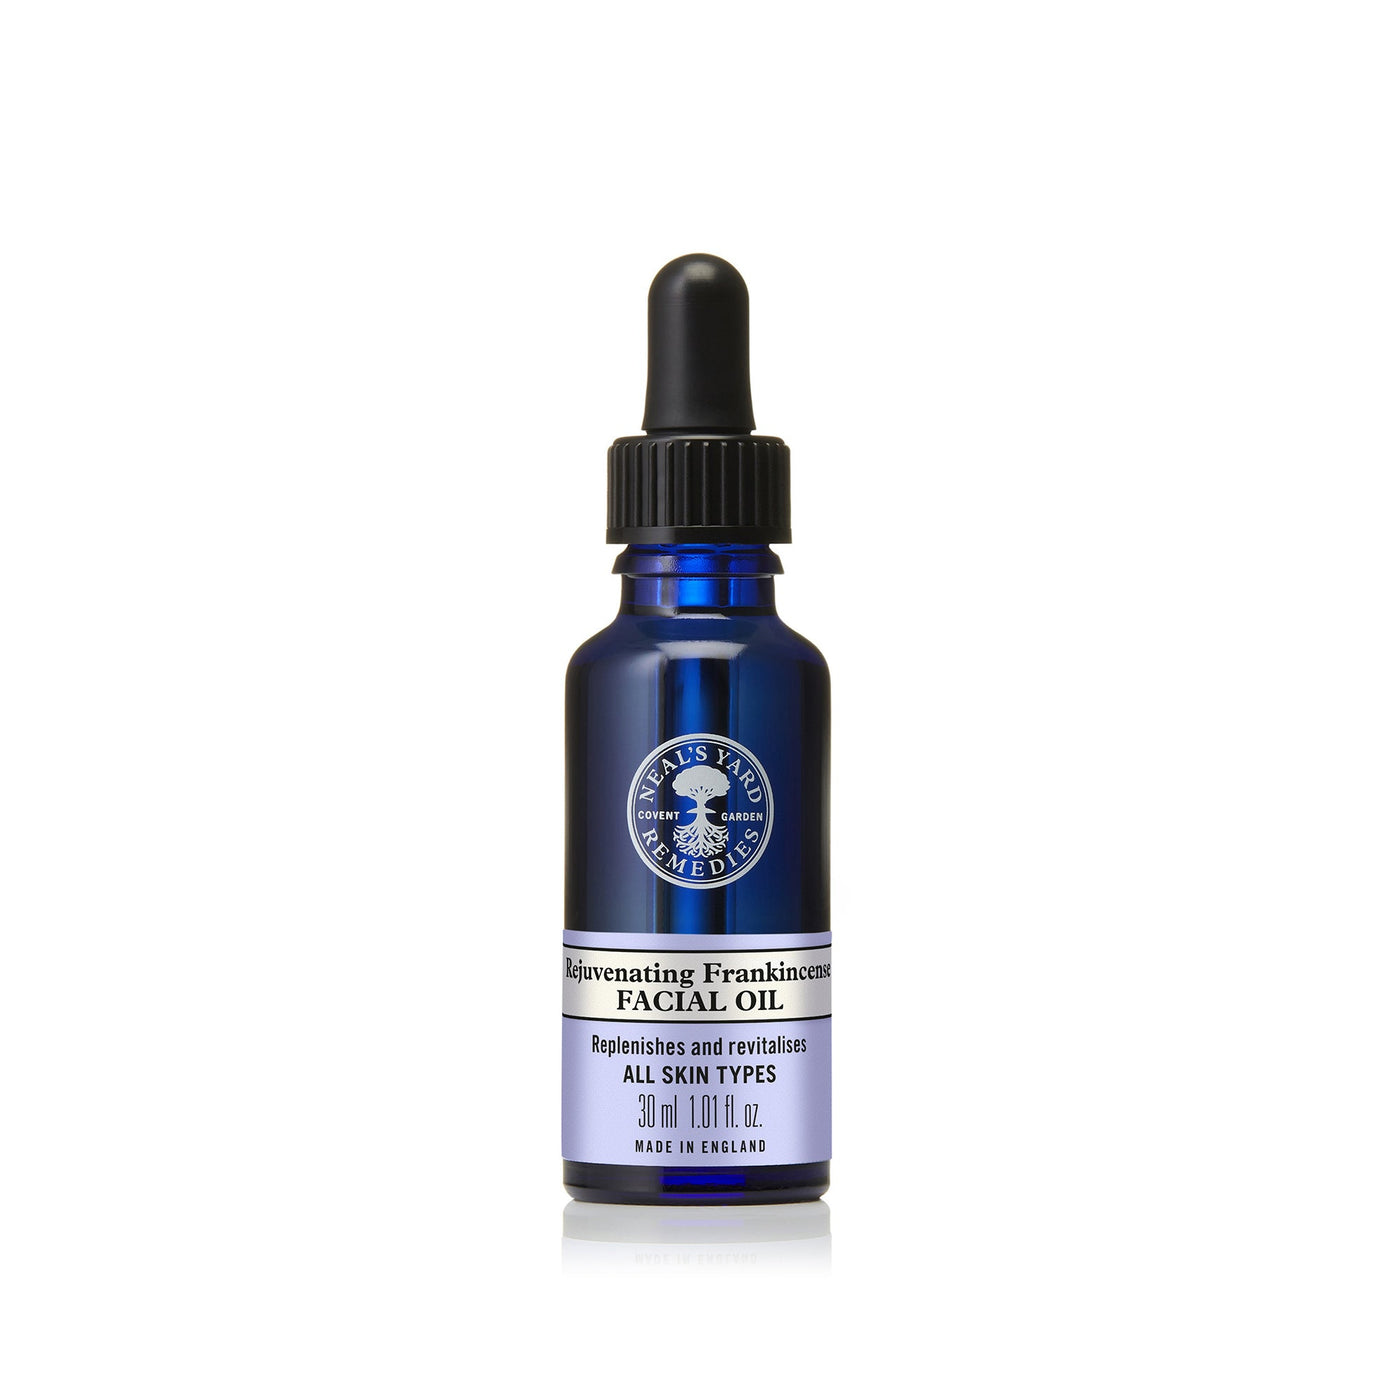 rejuvenating-frankincense-facial-oil-front-0785-high-res-2000px.jpg